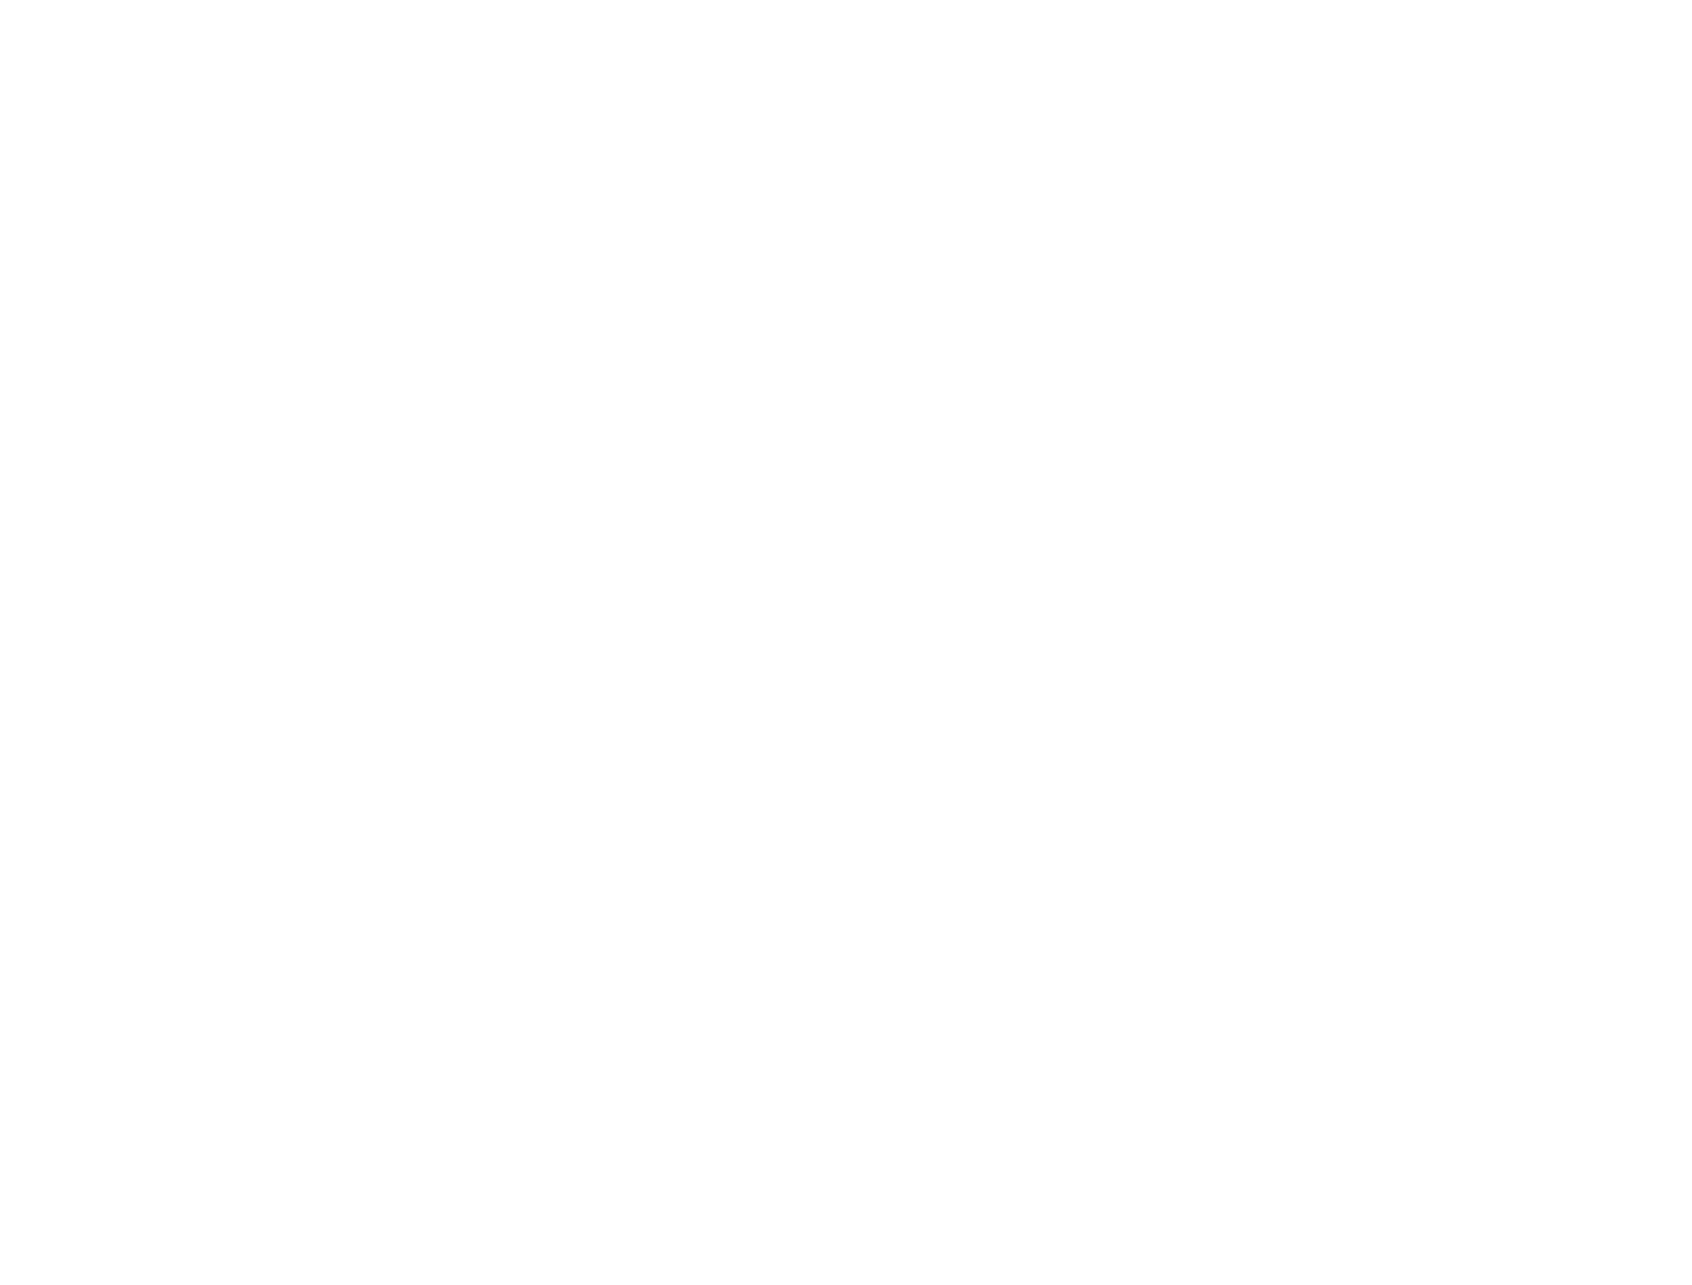 KU School of Medicine Wichita logo